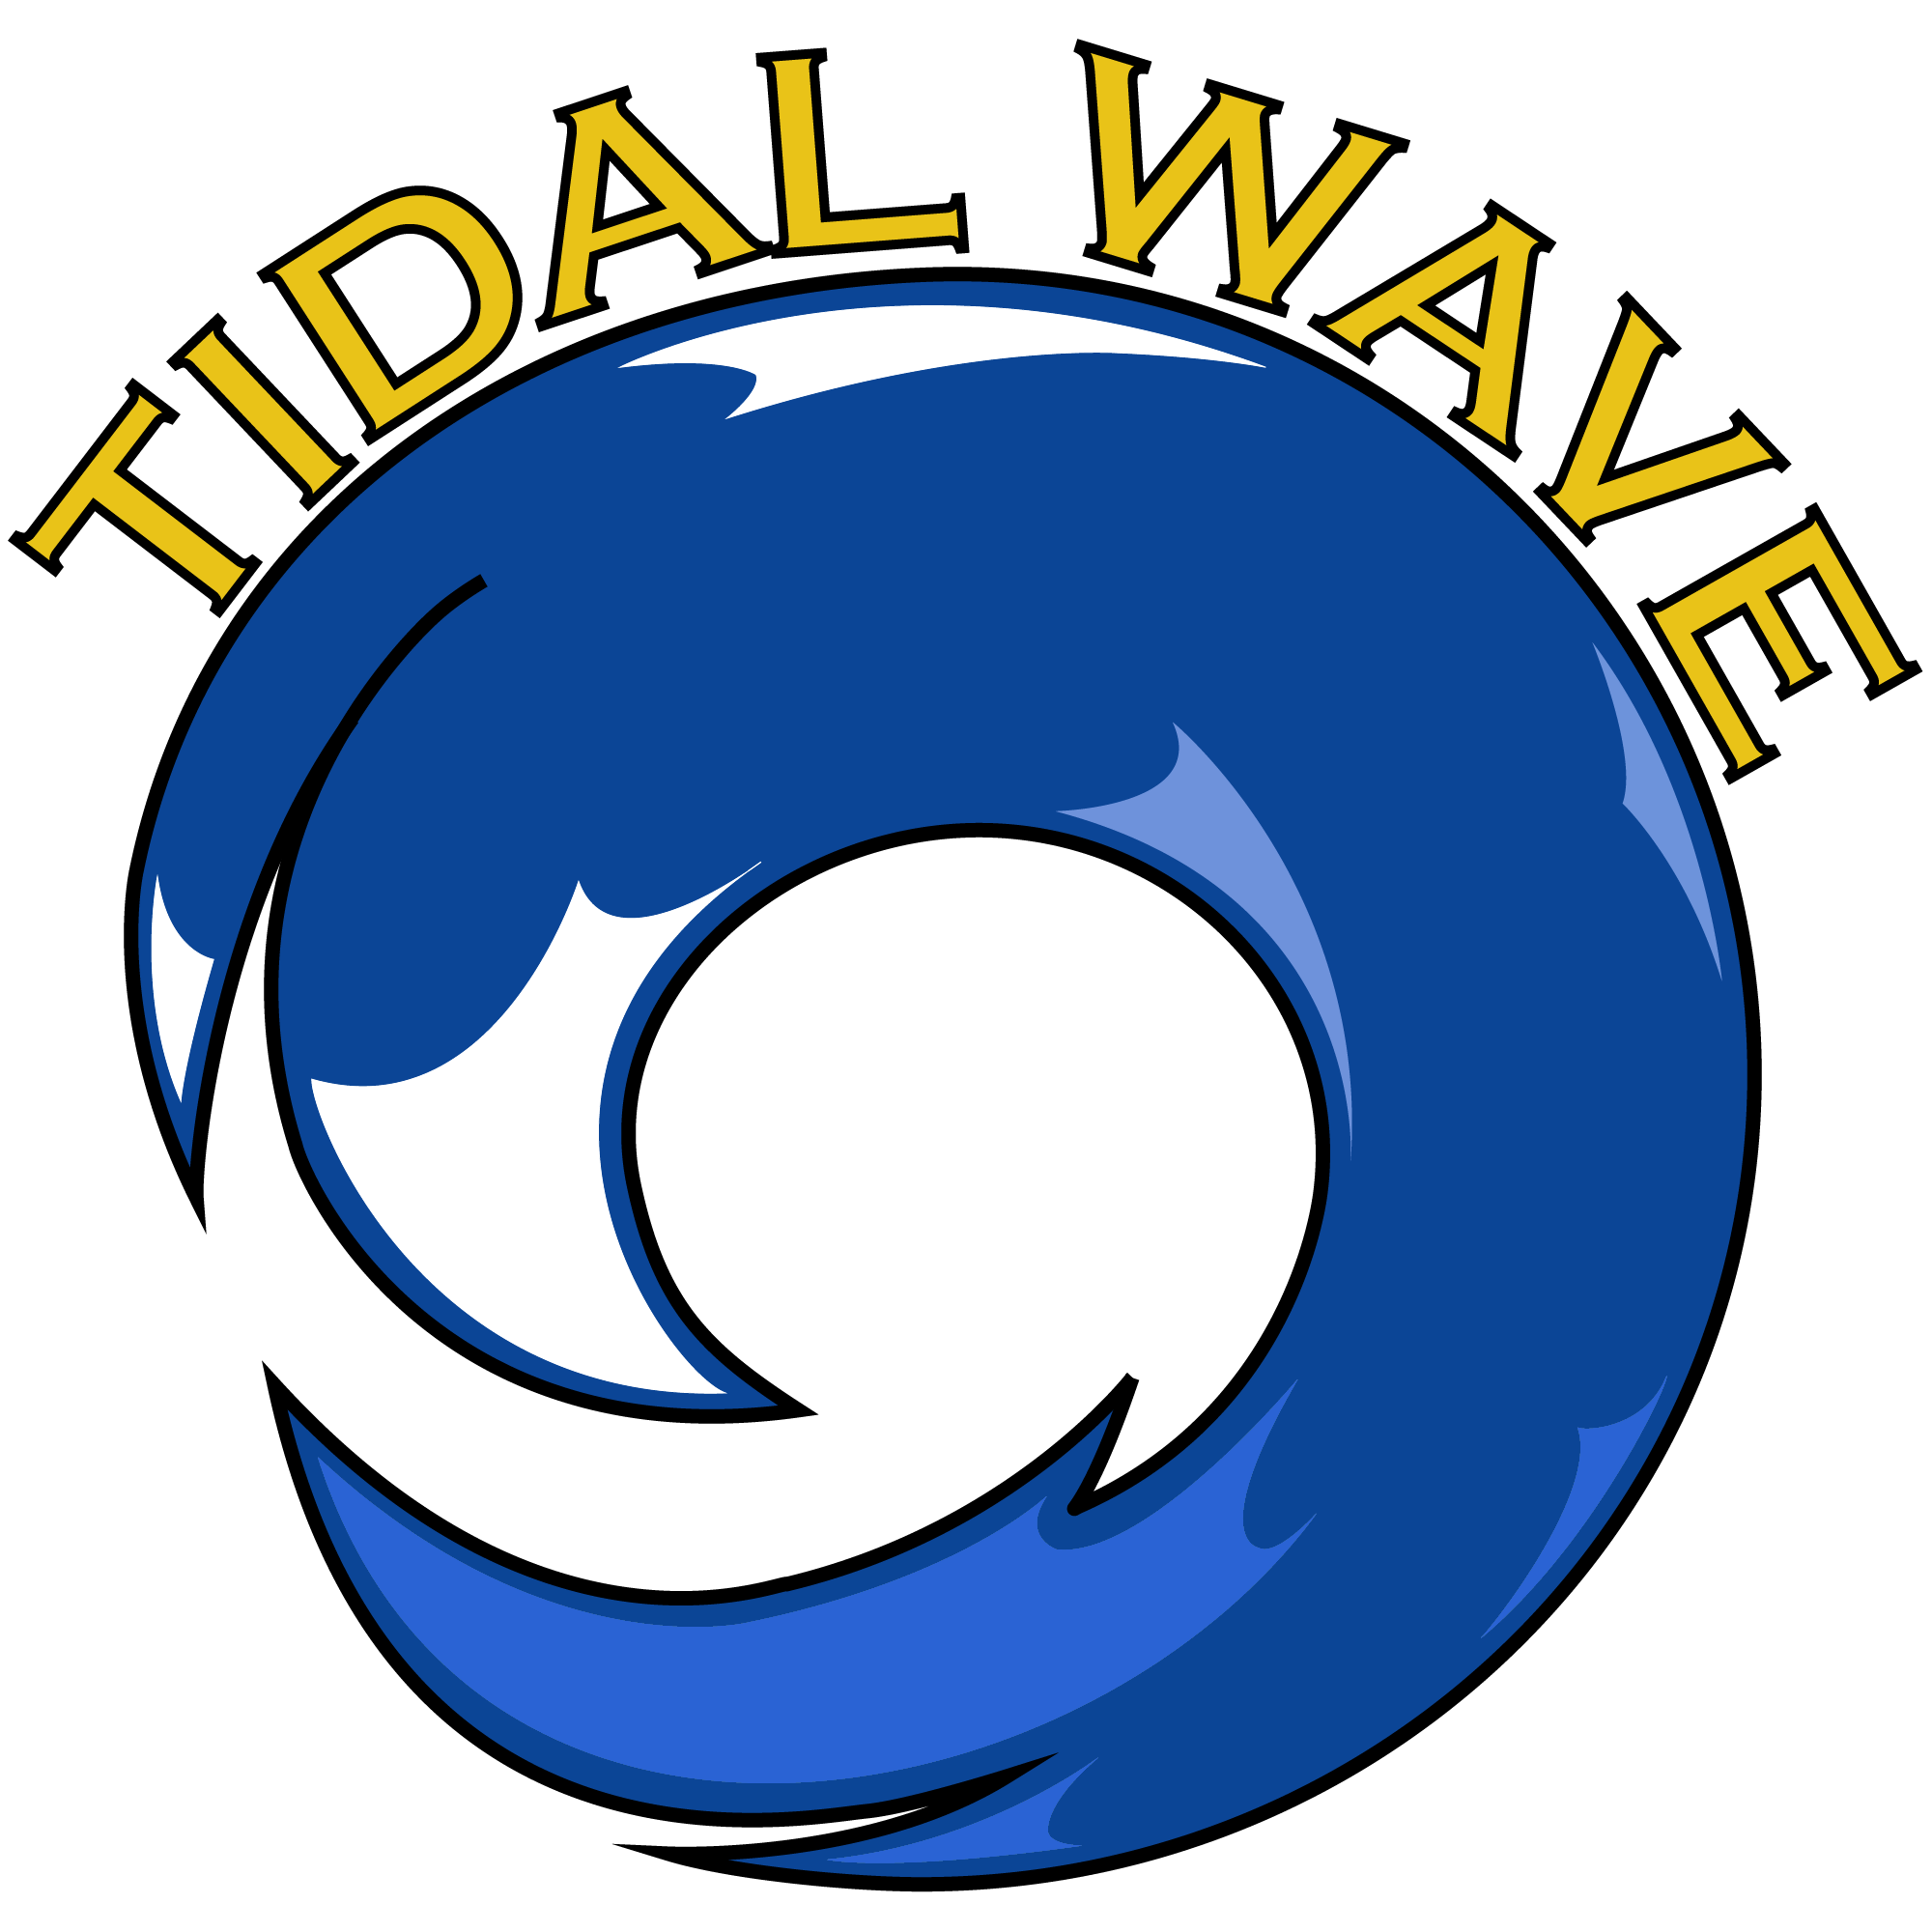 Tidal Wave Logo